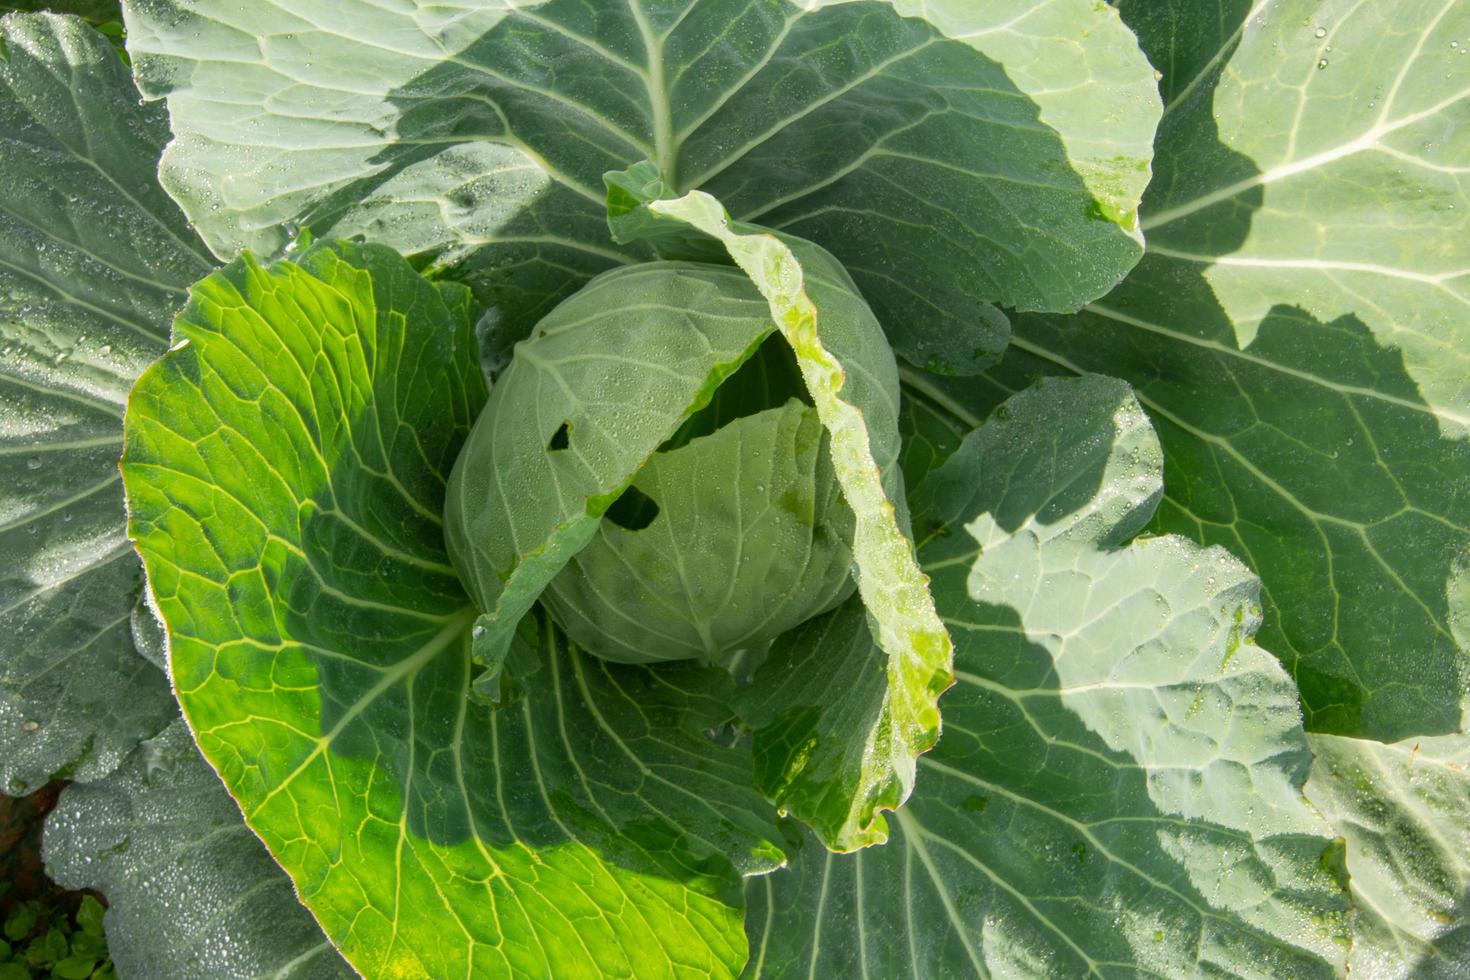 repollo en la granja de verduras en verano foto